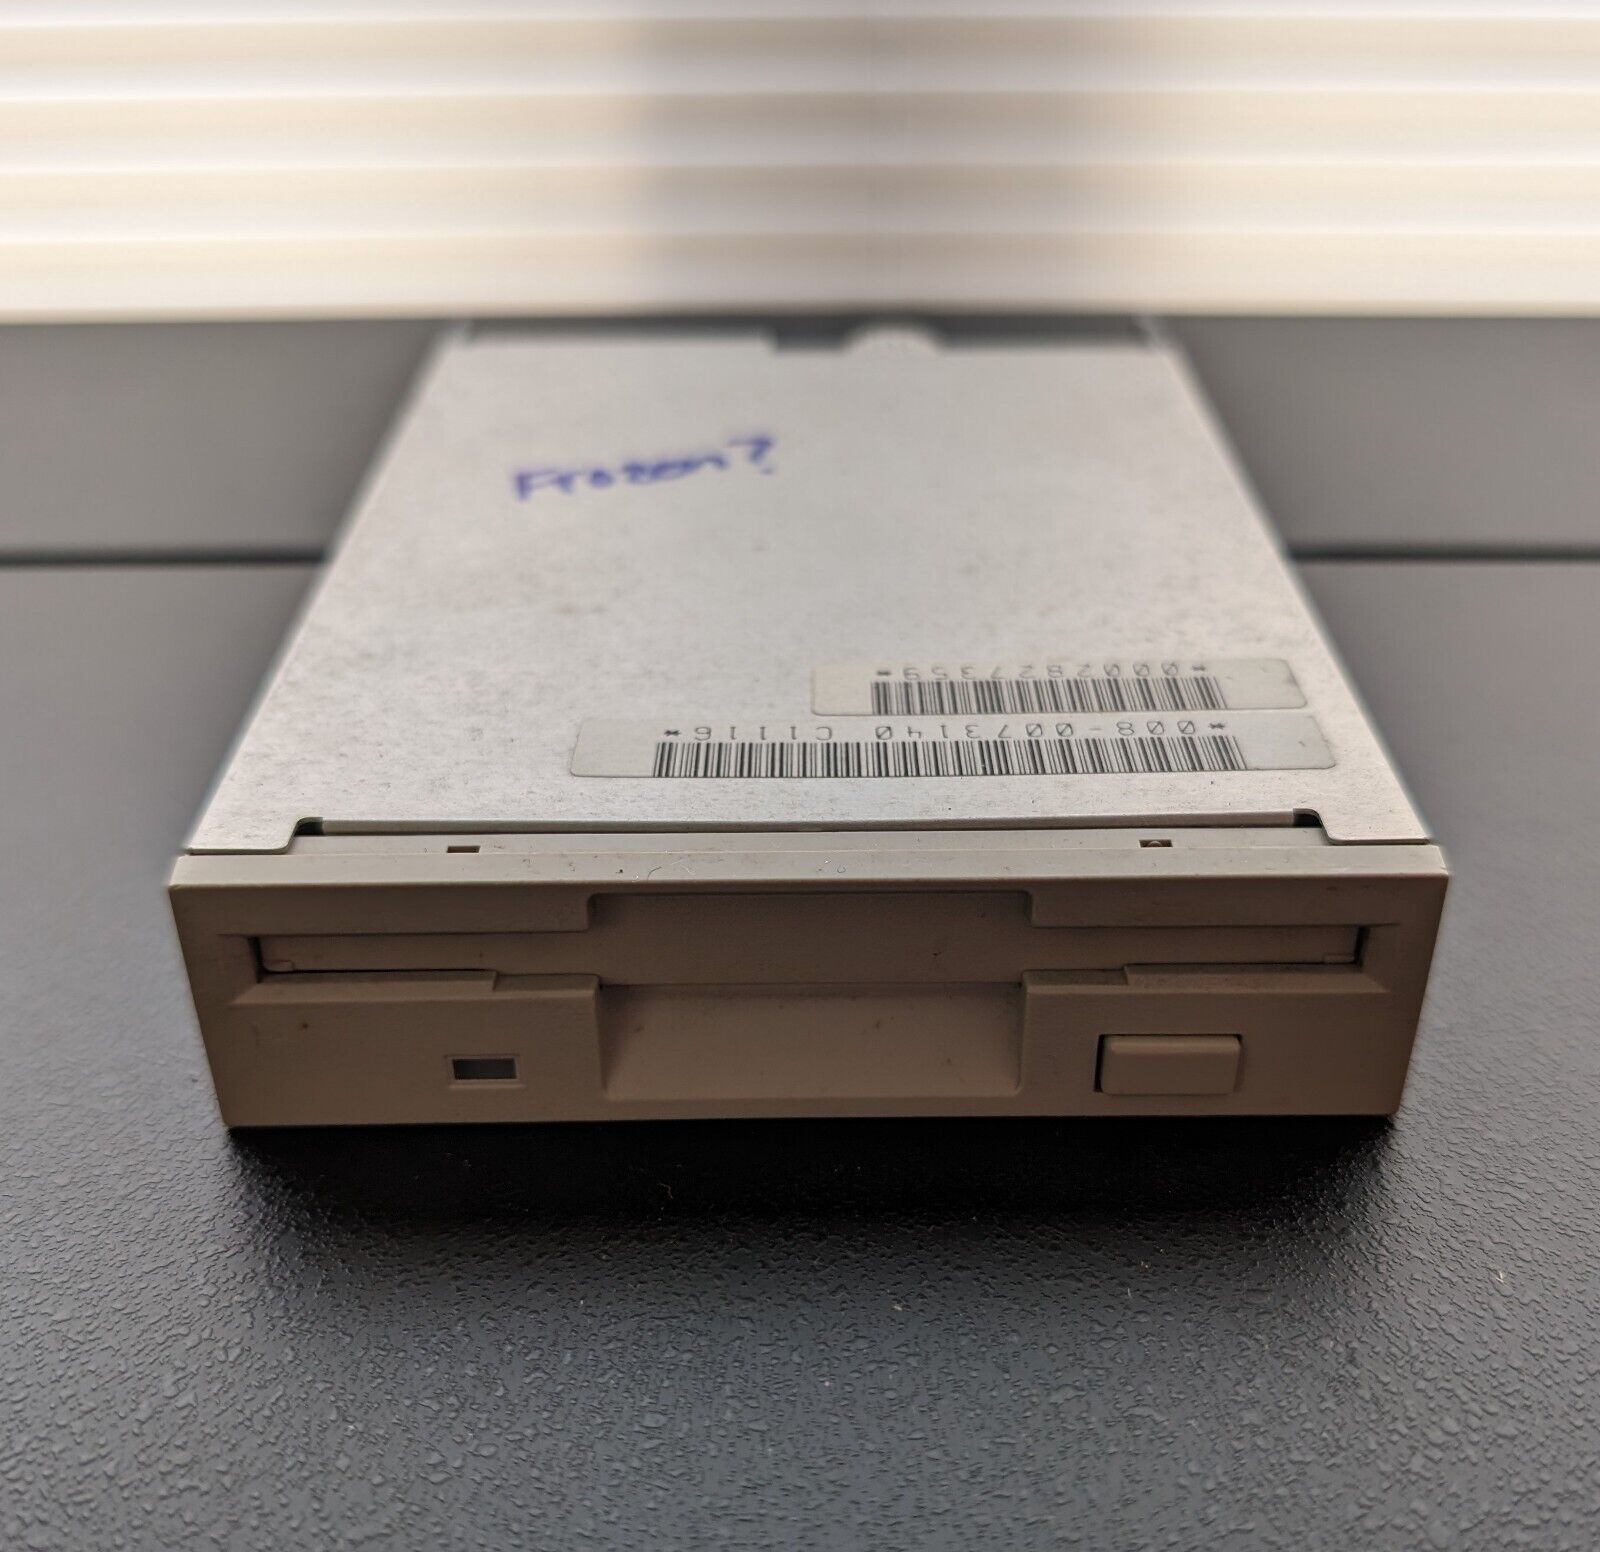 TEAC 3.5 1.44MB FD-235HF Internal Floppy Drive